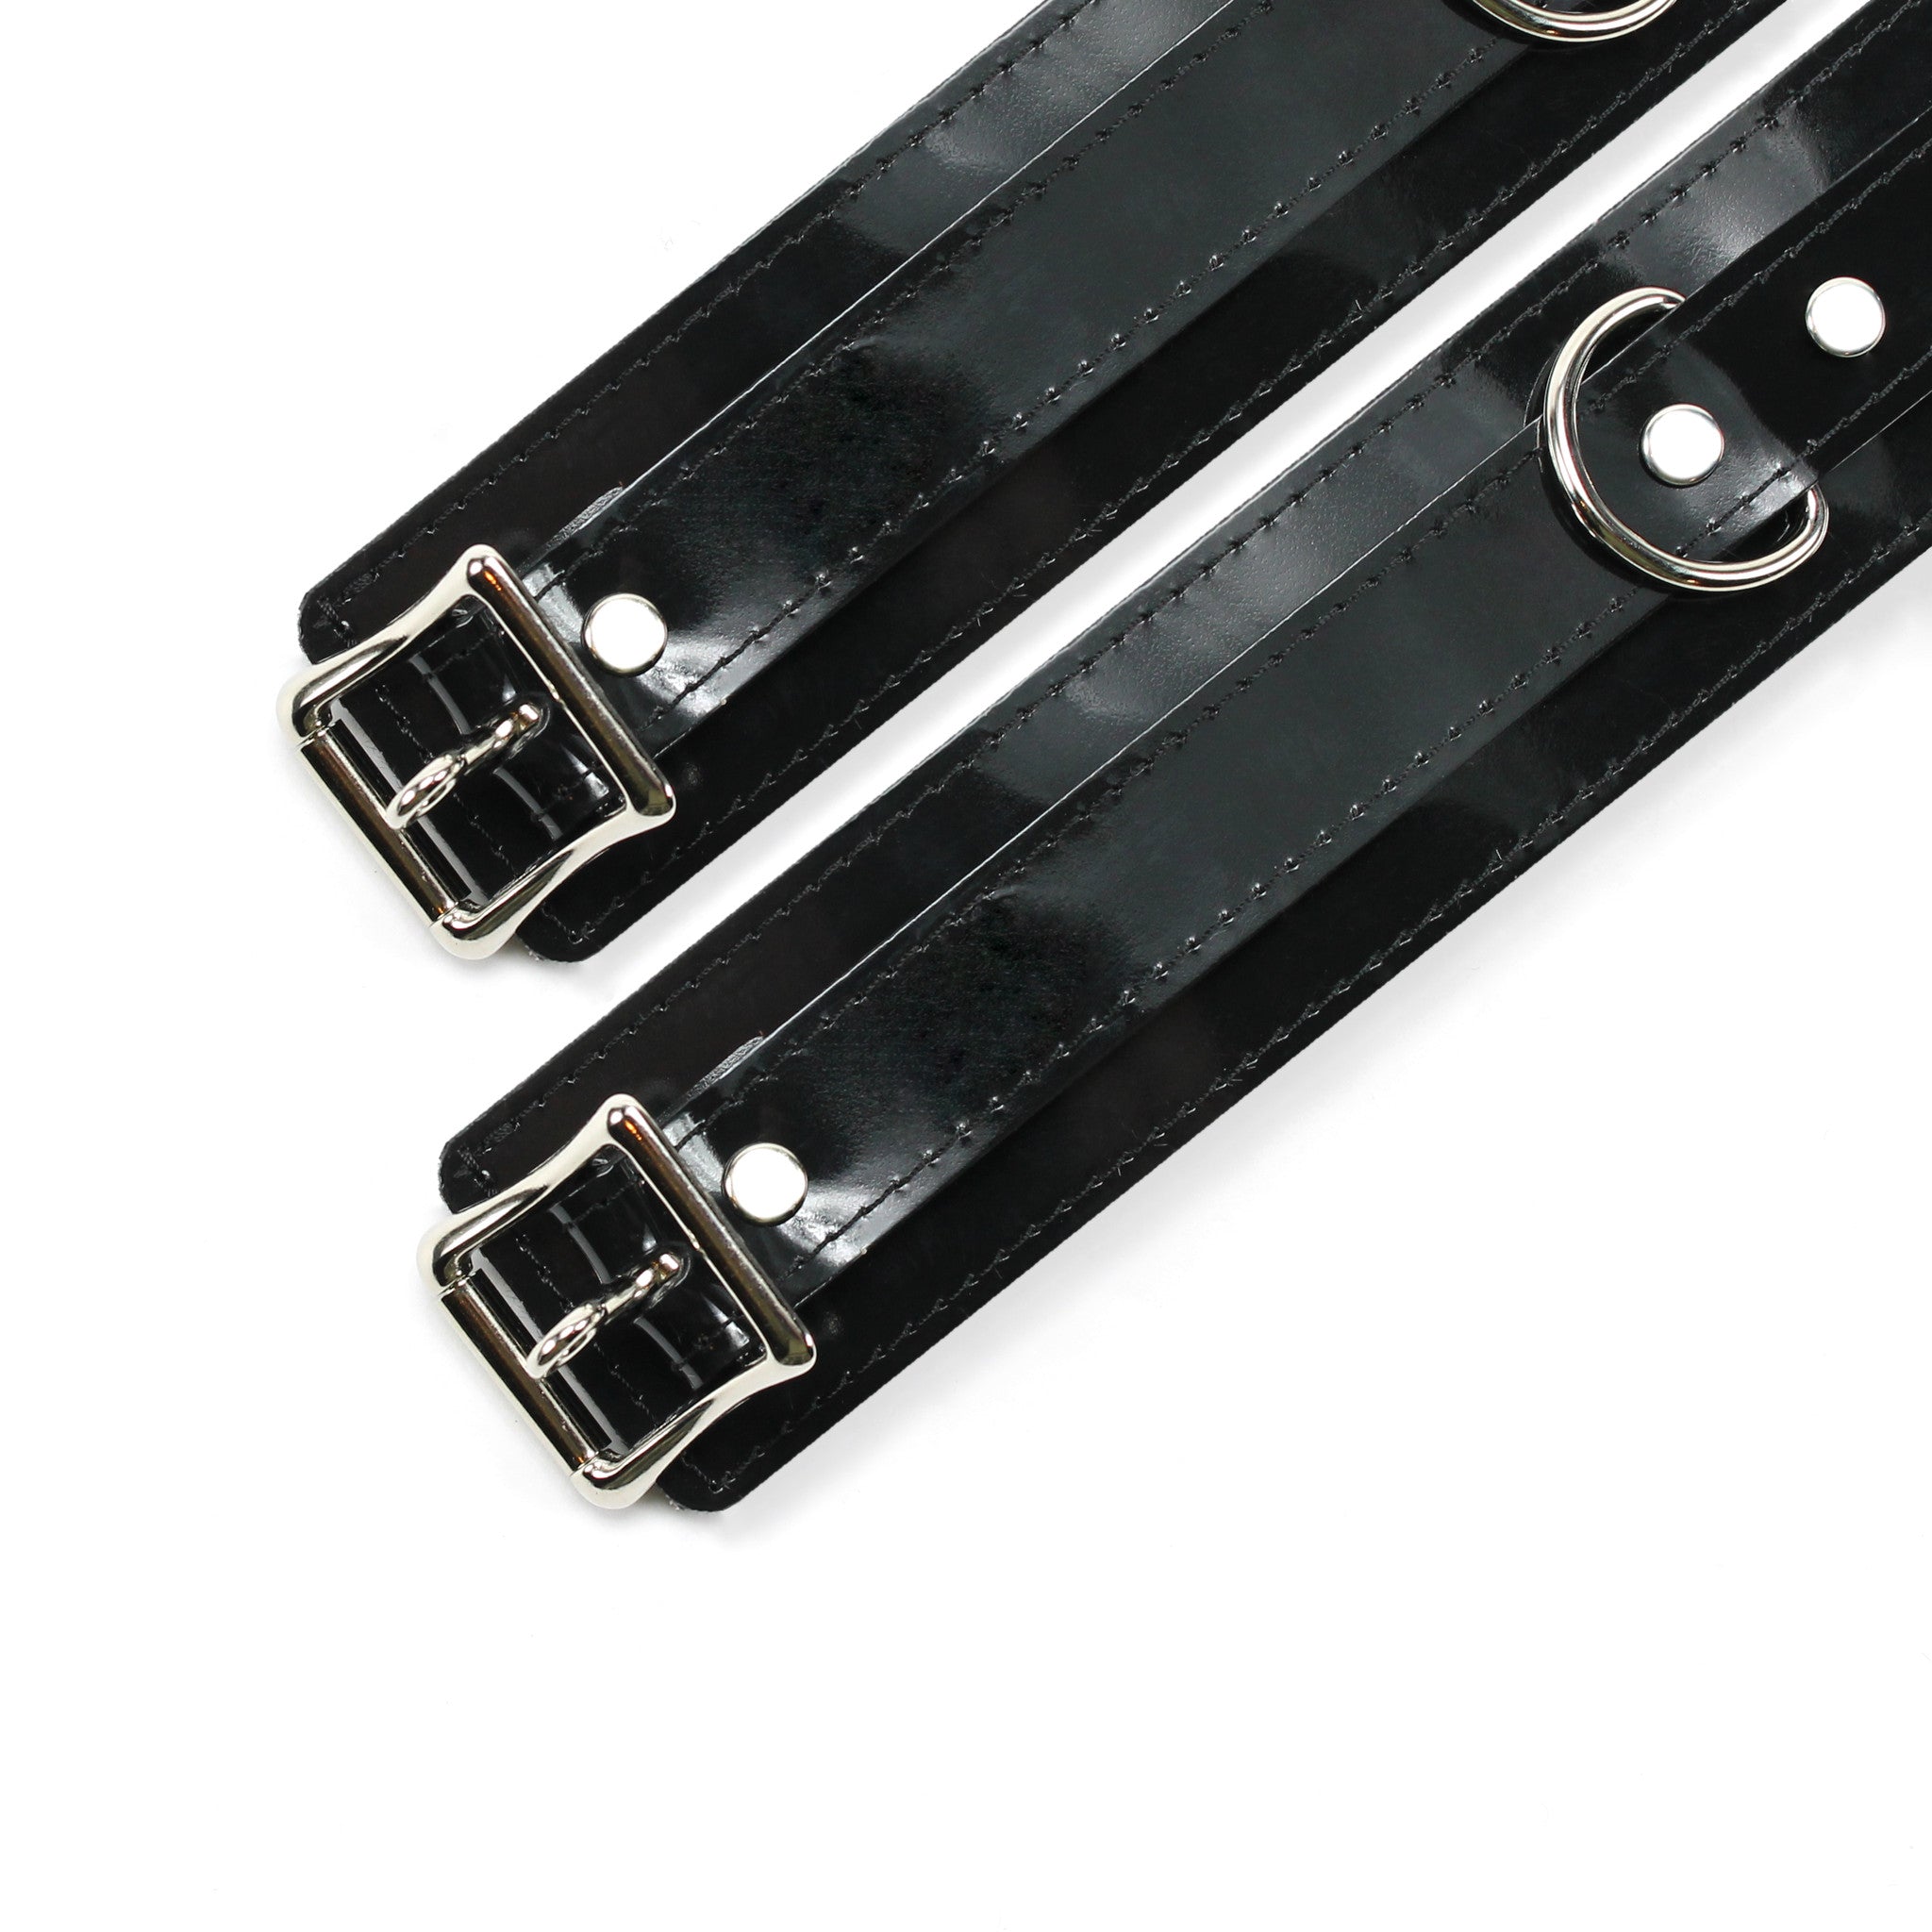 Luxury vegan leather padded bondage cuffs bondage cuffs with silver hardware